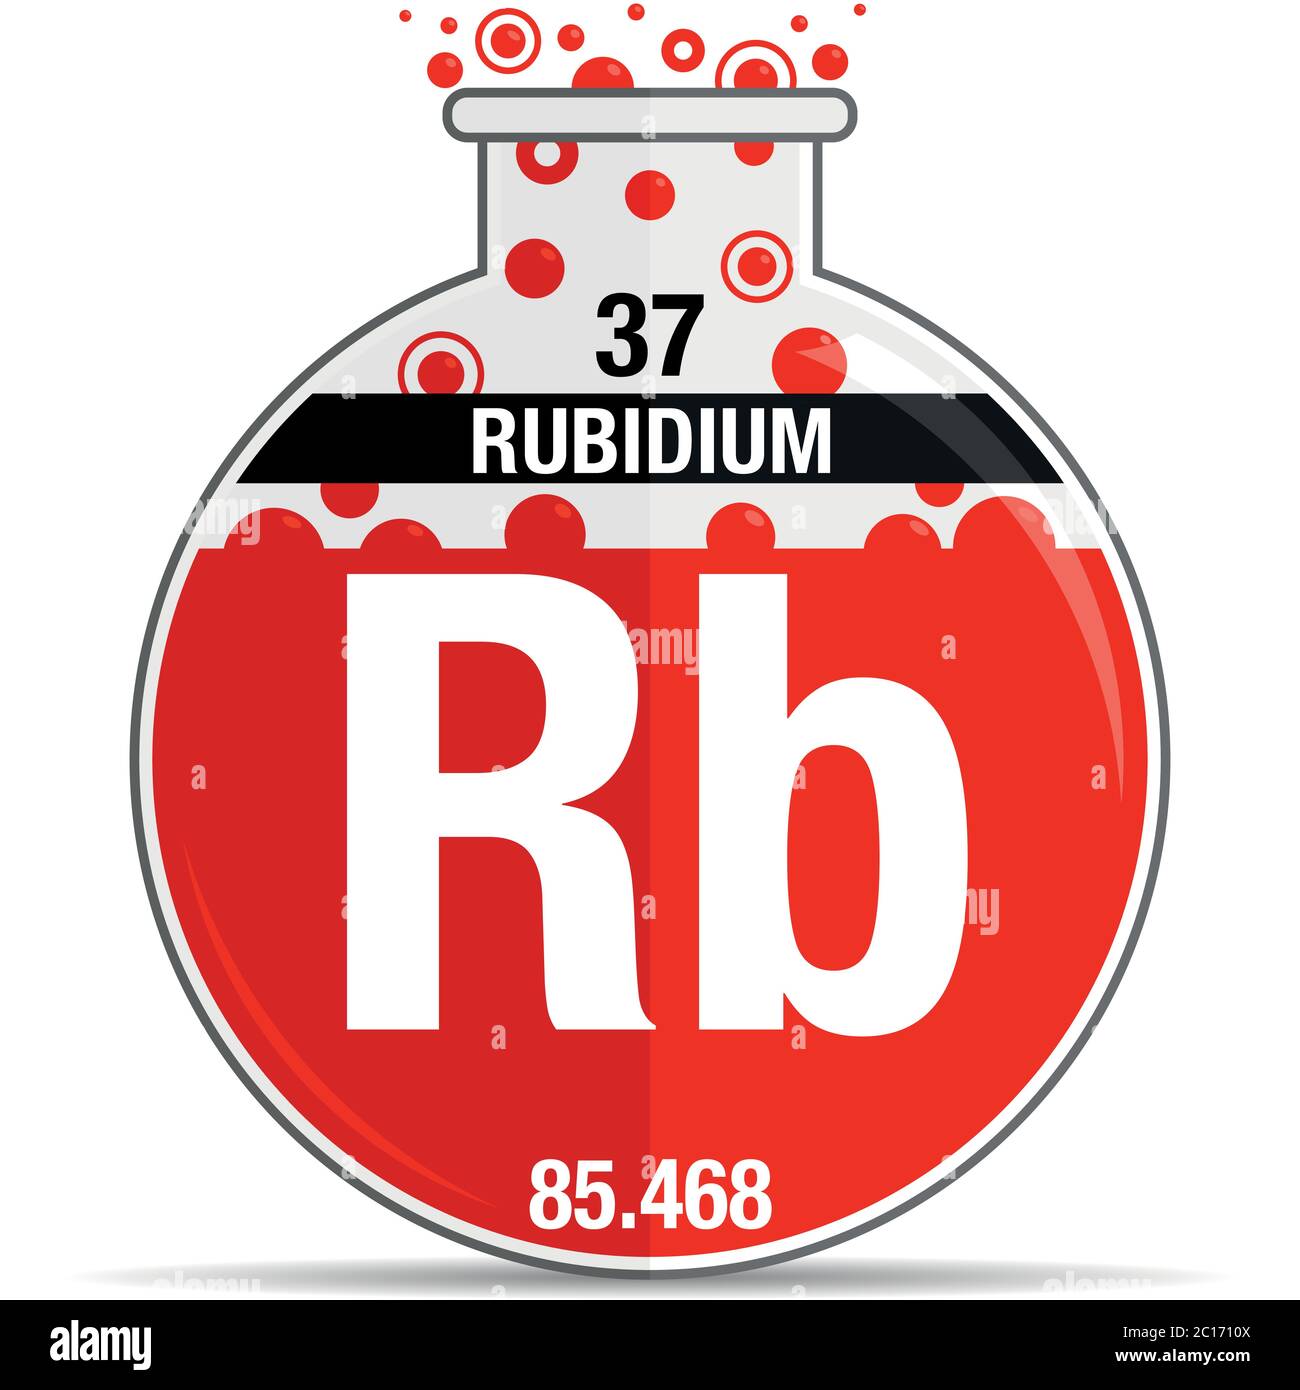 Rubidium symbol Stock Photos and Images